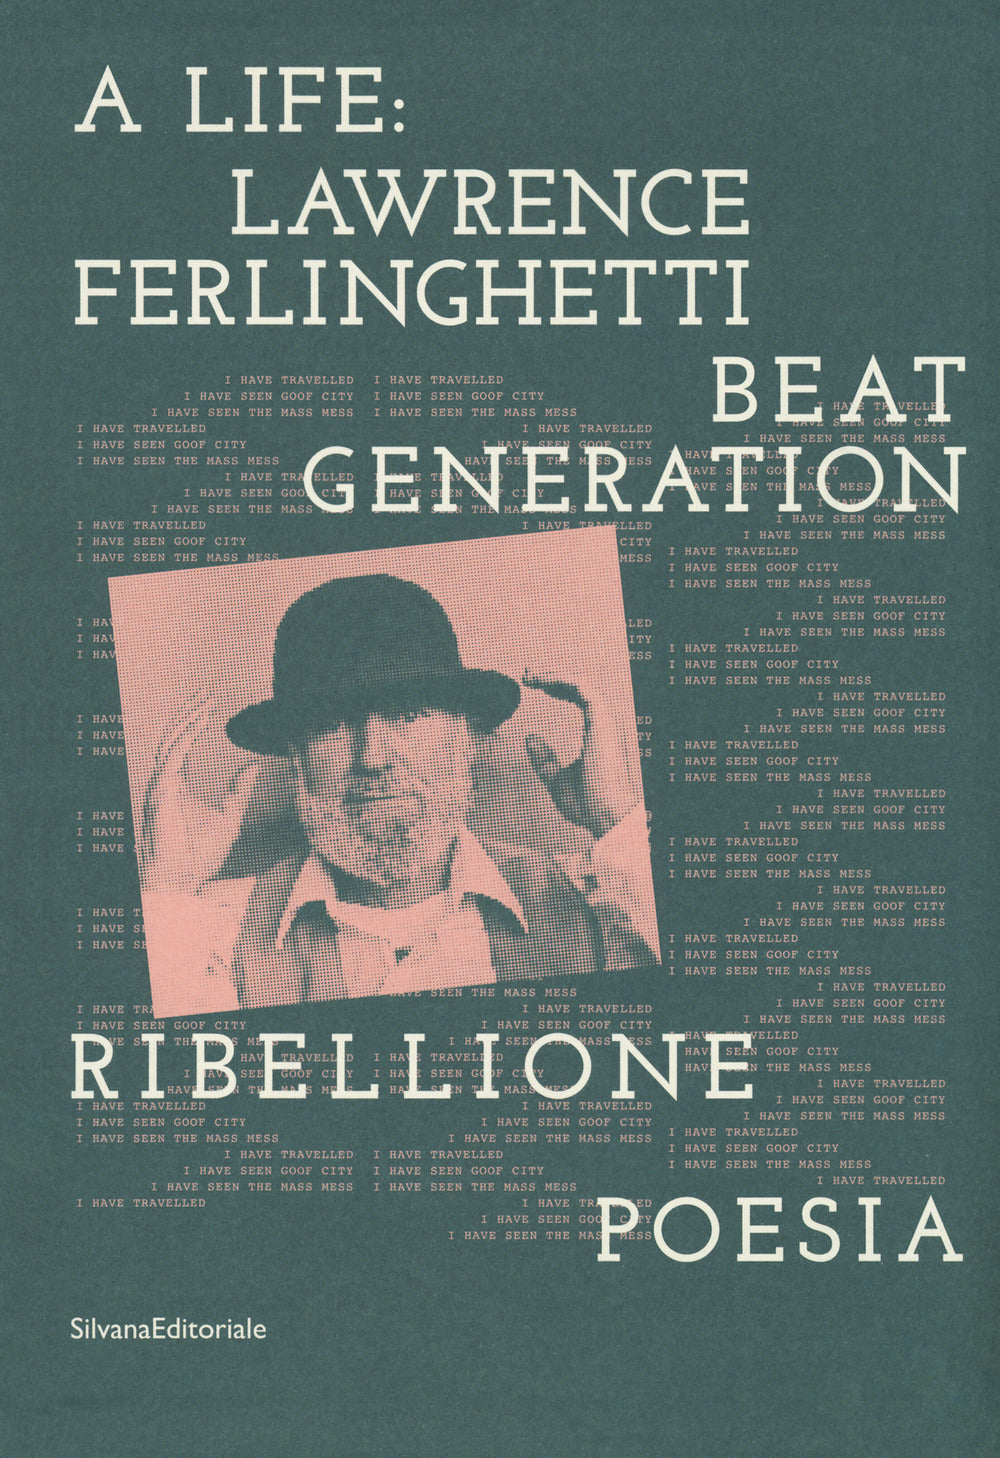 A life: Lawrence Ferlinghetti. Beat generation, ribellione, poesia.